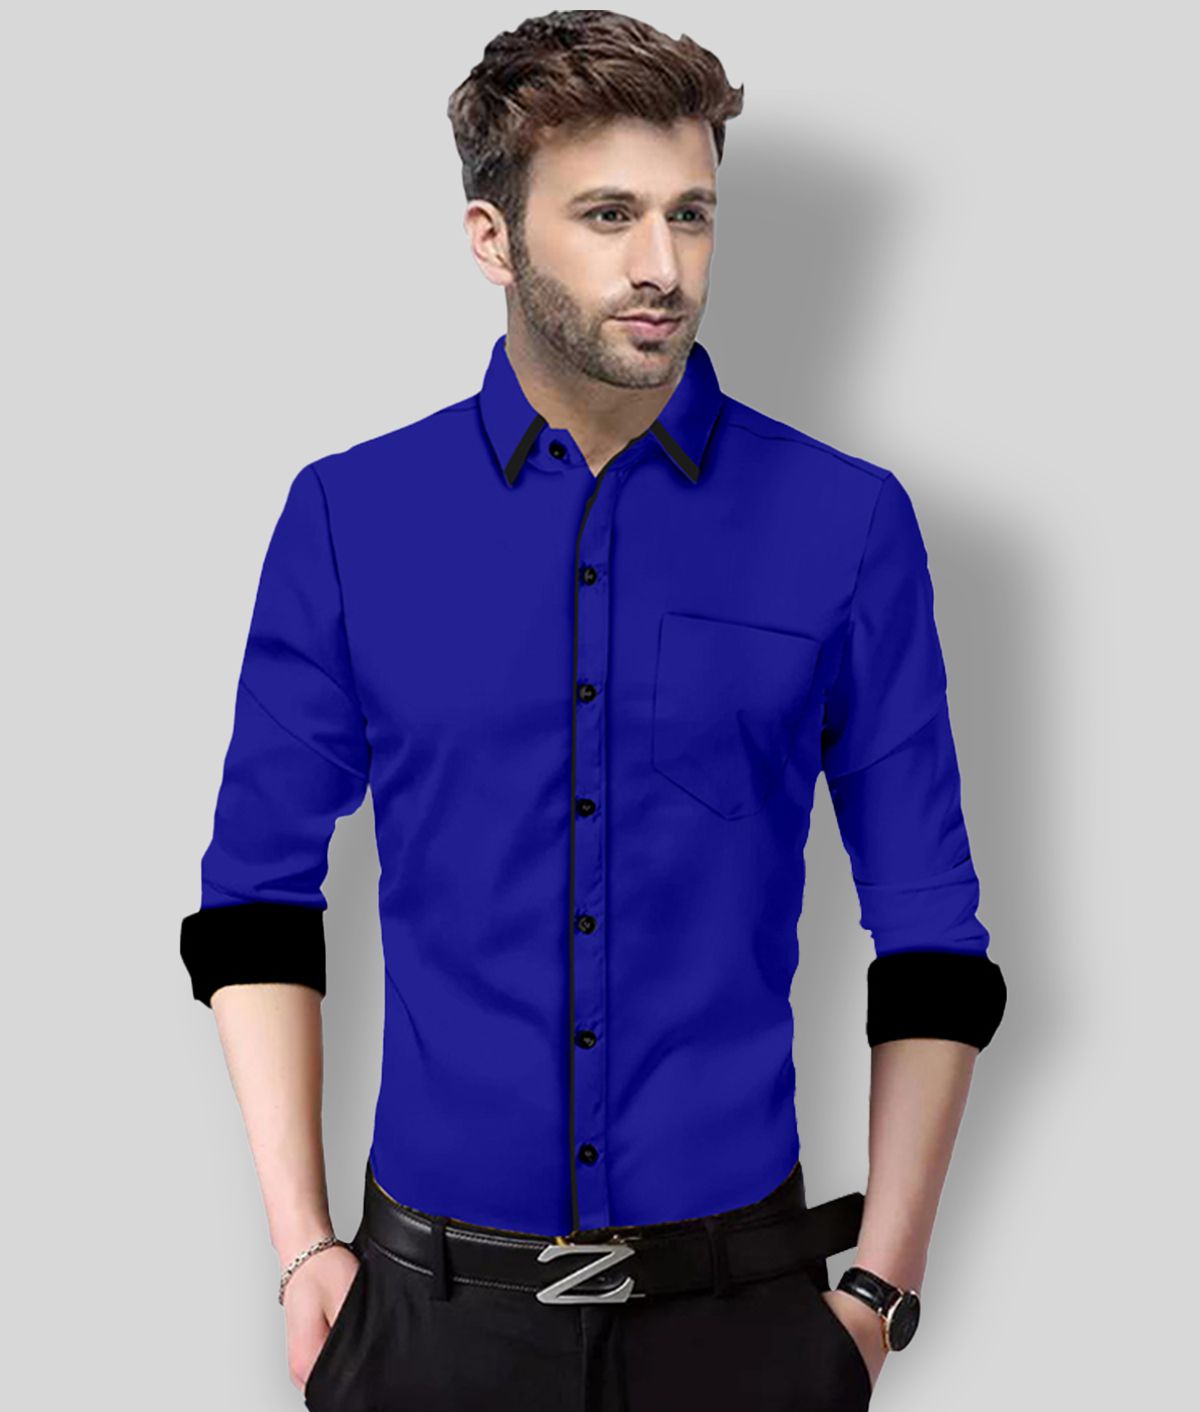 P&V CREATIONS - Blue Cotton Blend Slim Fit Men's Casual Shirt ( Pack of 1 )